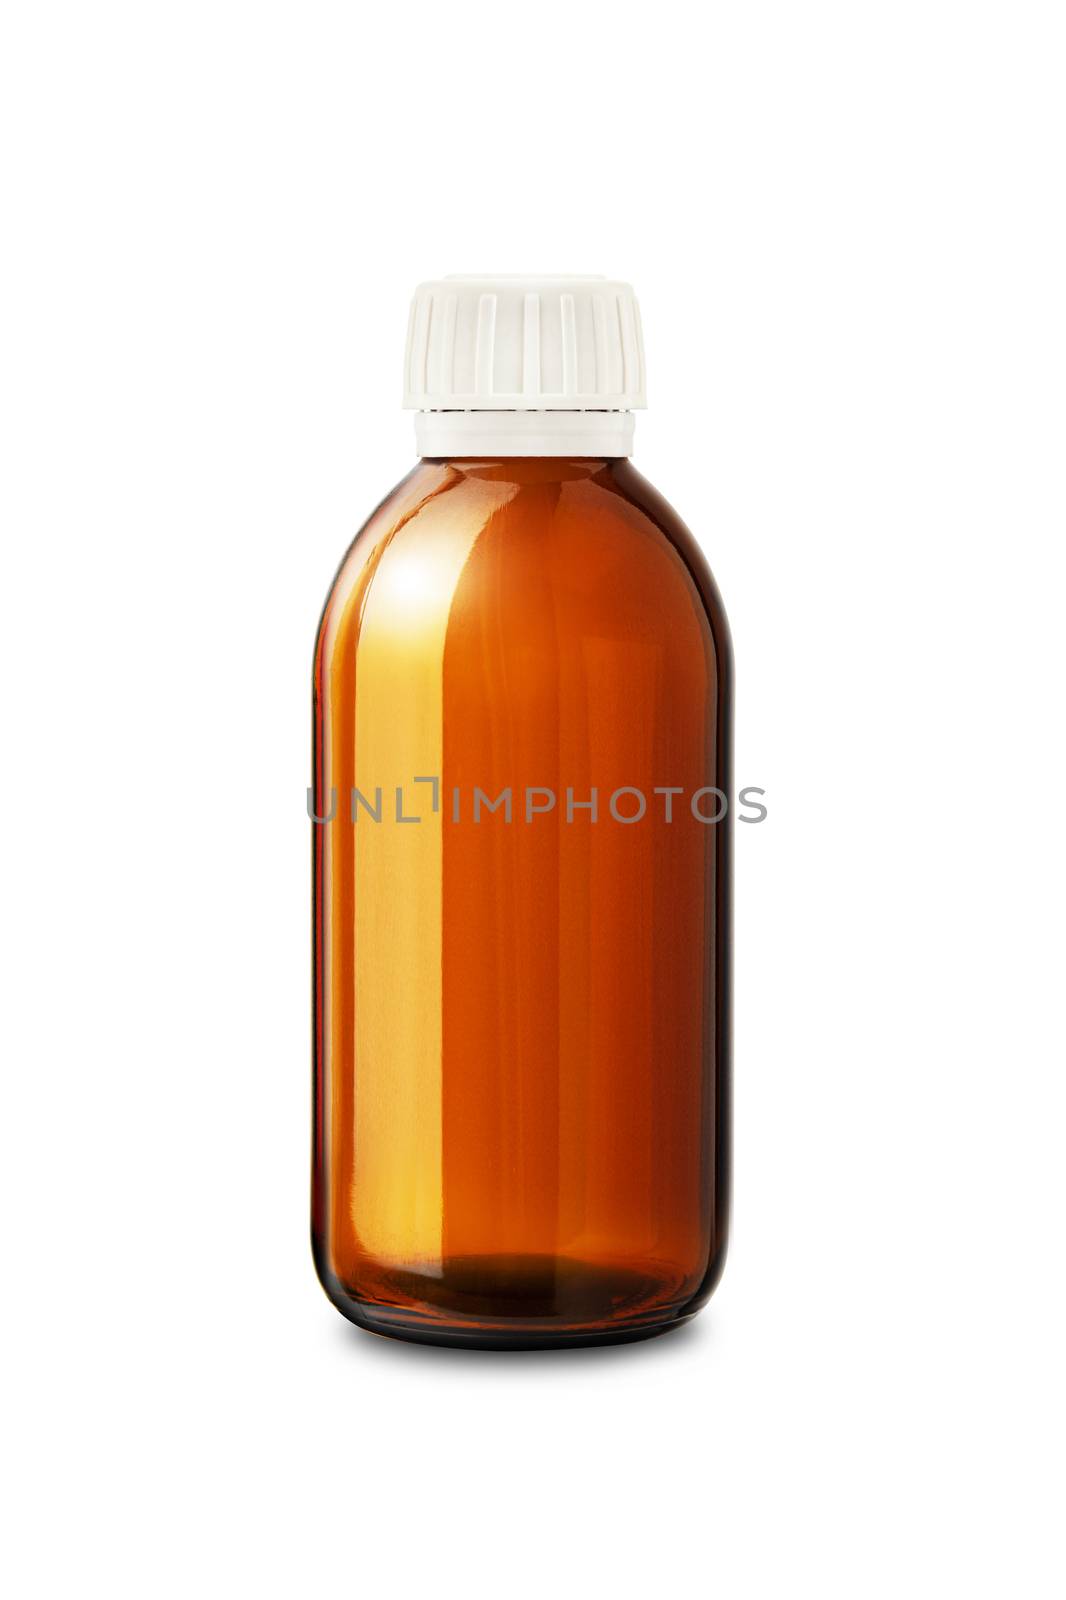 Closed Medicine bottle close up isolated on white background